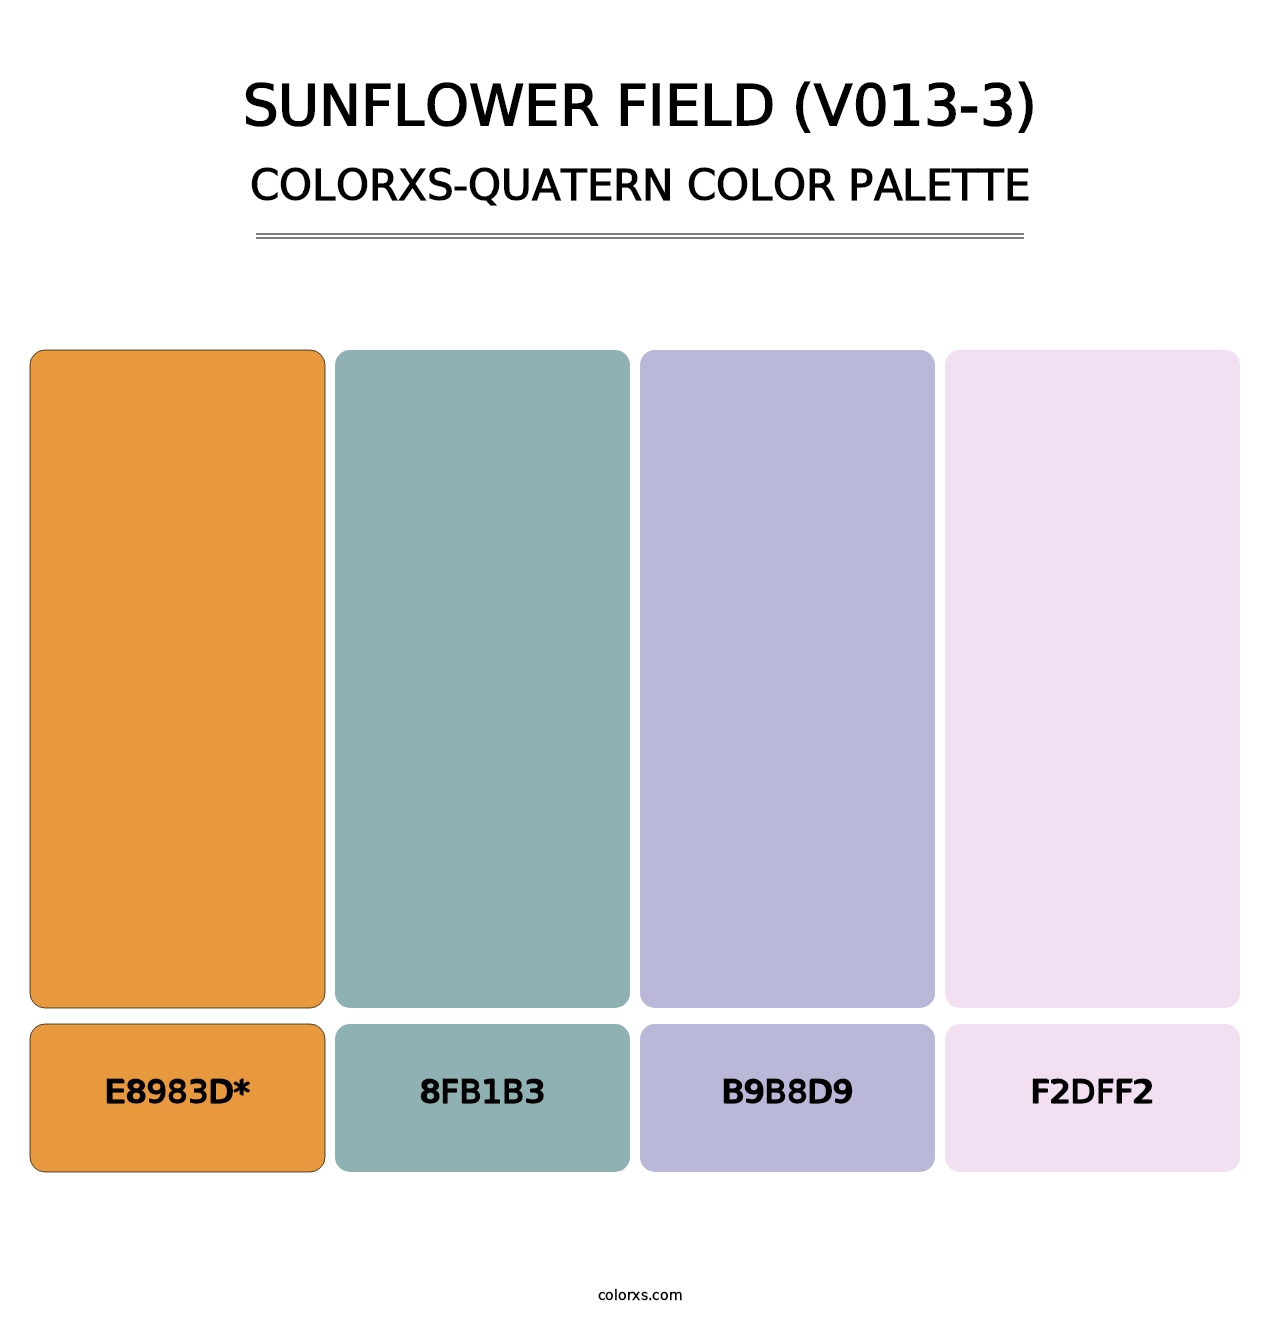 Sunflower Field (V013-3) - Colorxs Quatern Palette